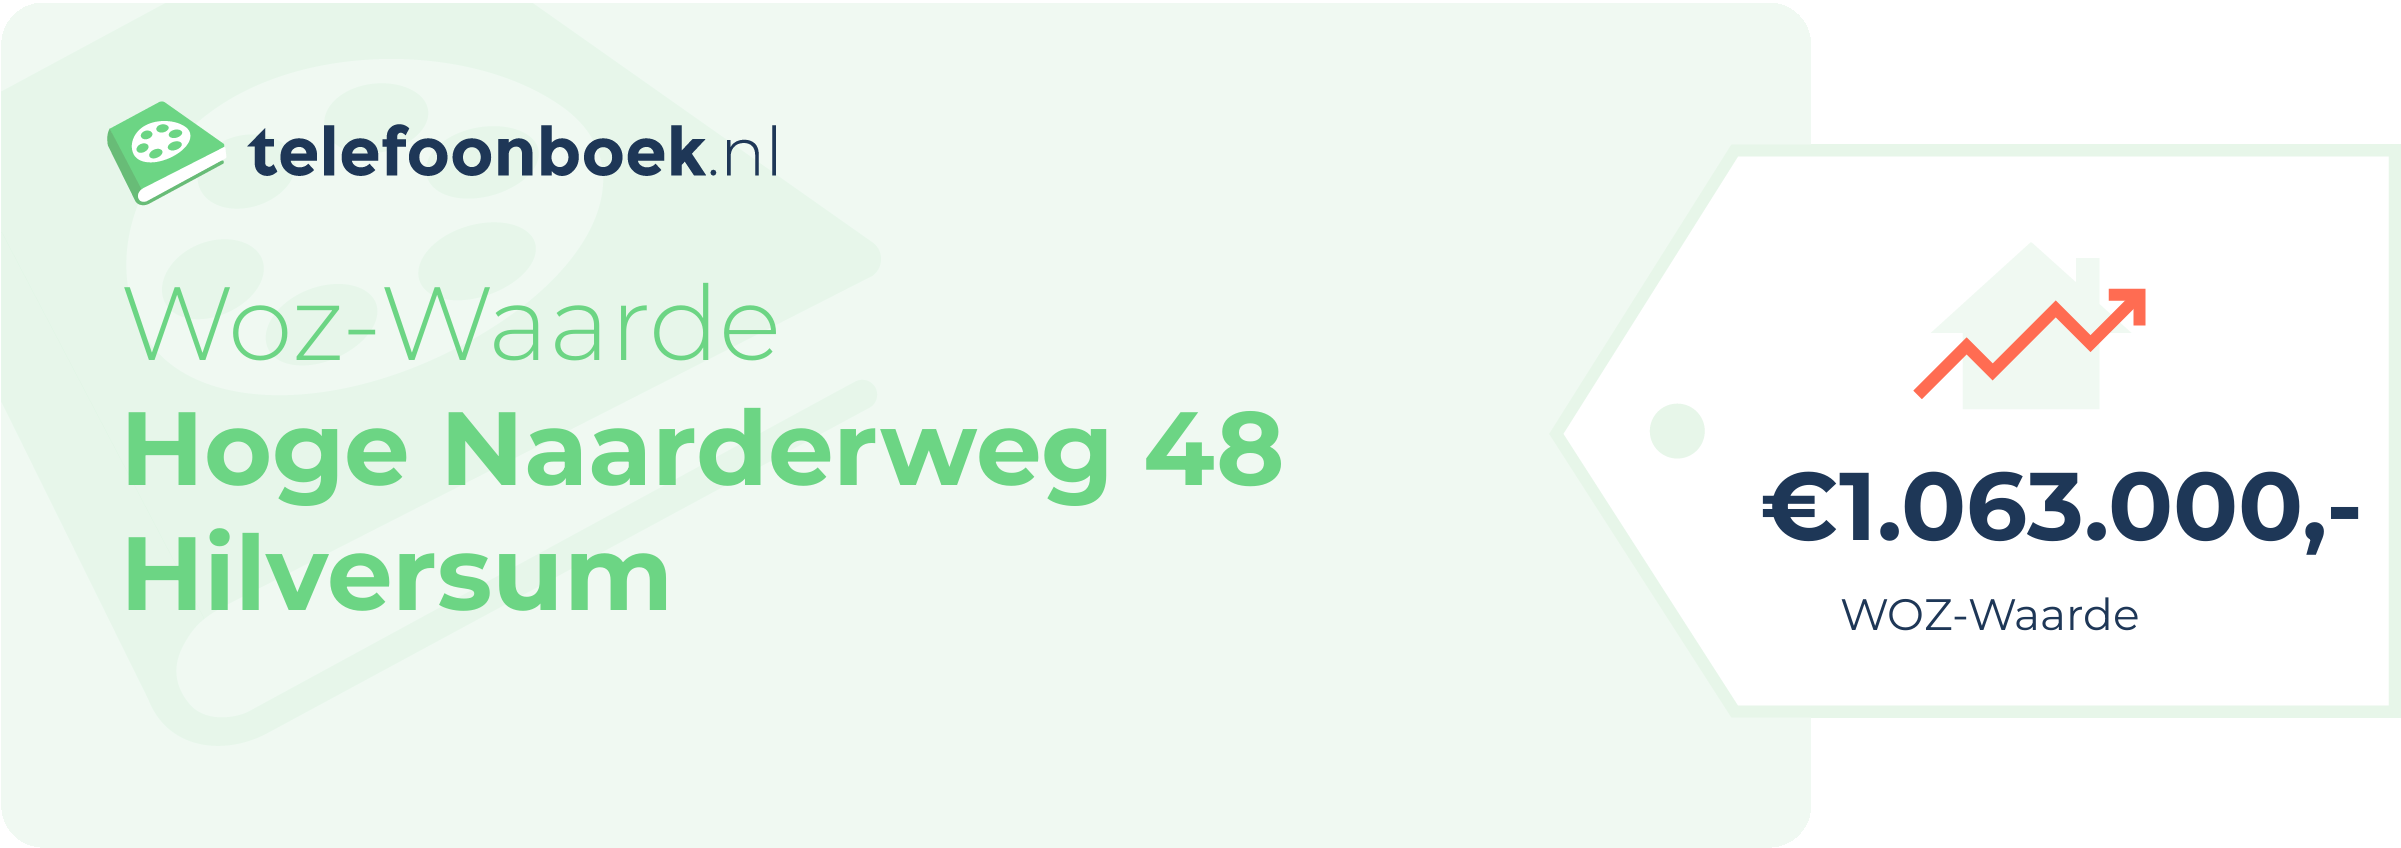 WOZ-waarde Hoge Naarderweg 48 Hilversum